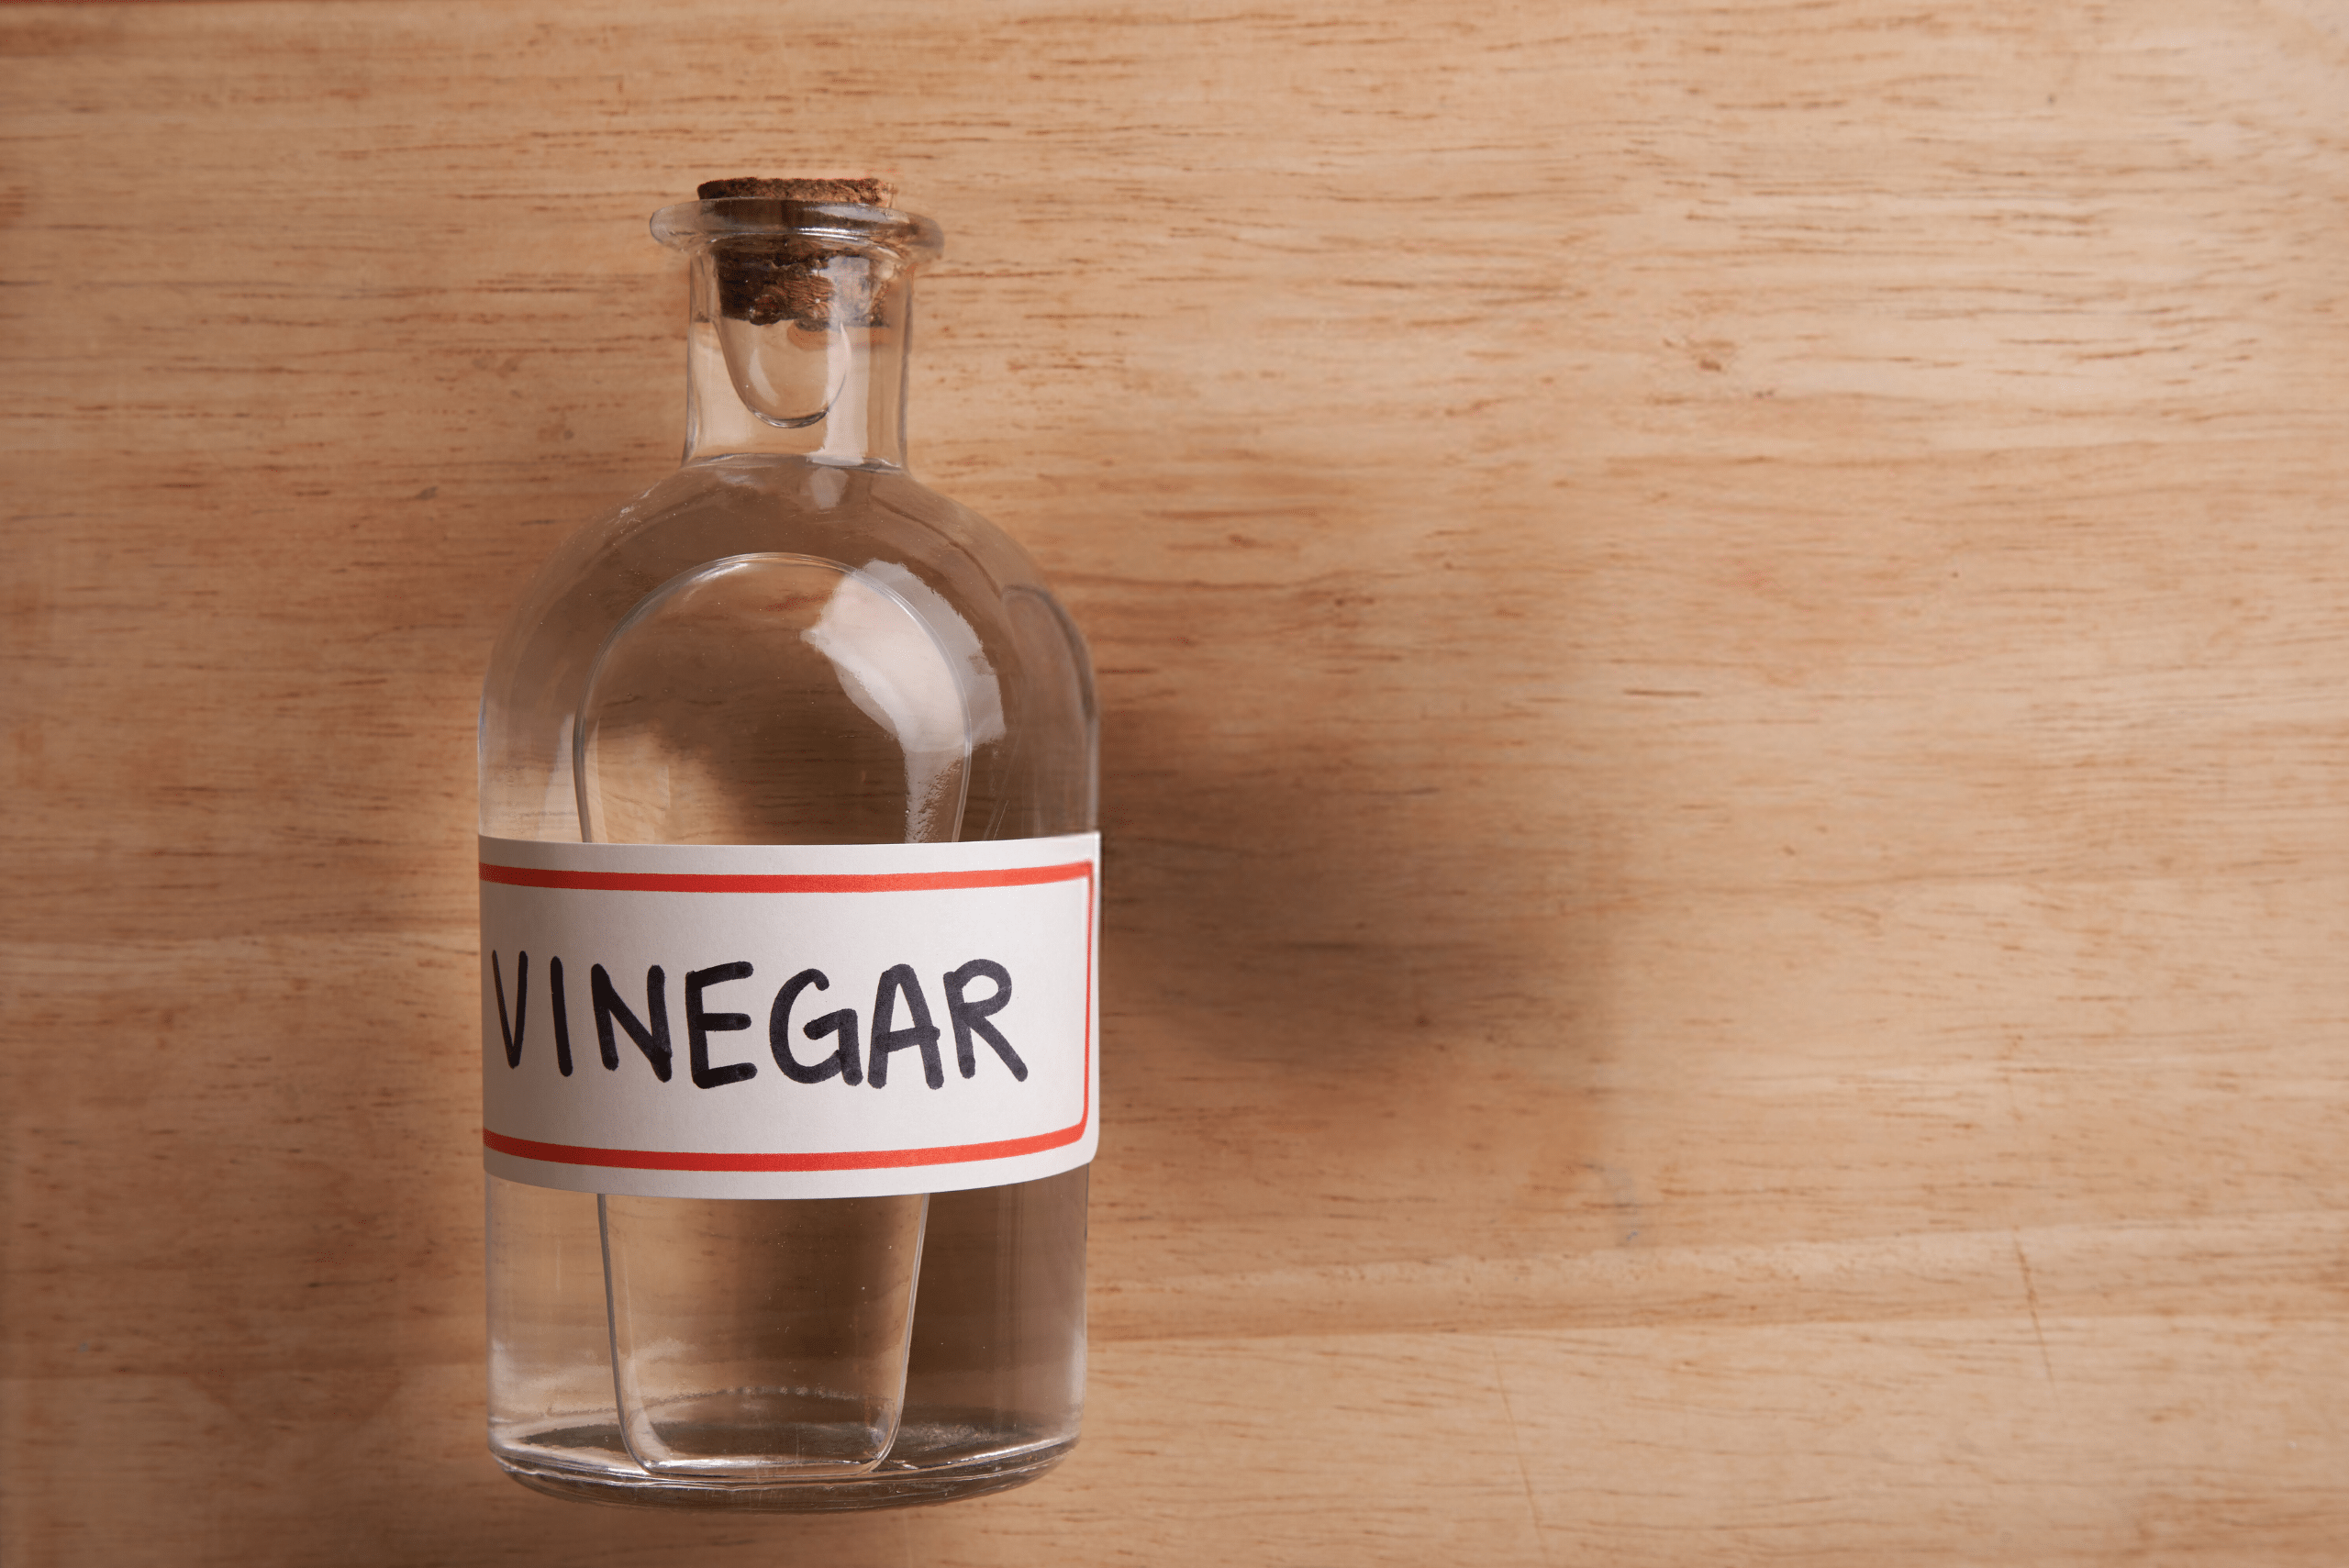 A glass bottle labelled Vinegar.